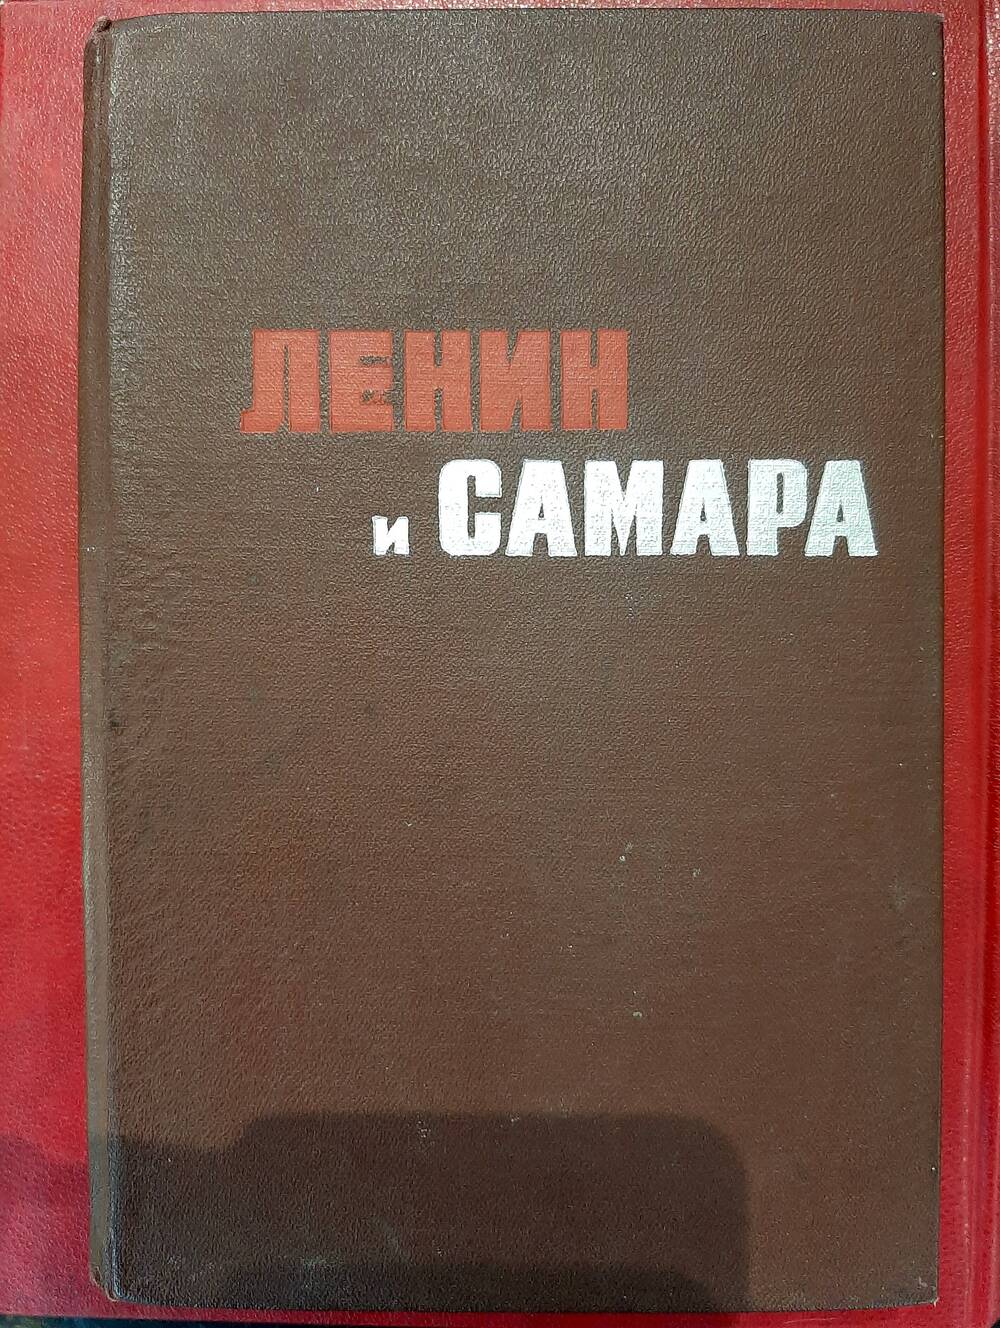 Книга Ленин и Самара, сборник документов и материалов.